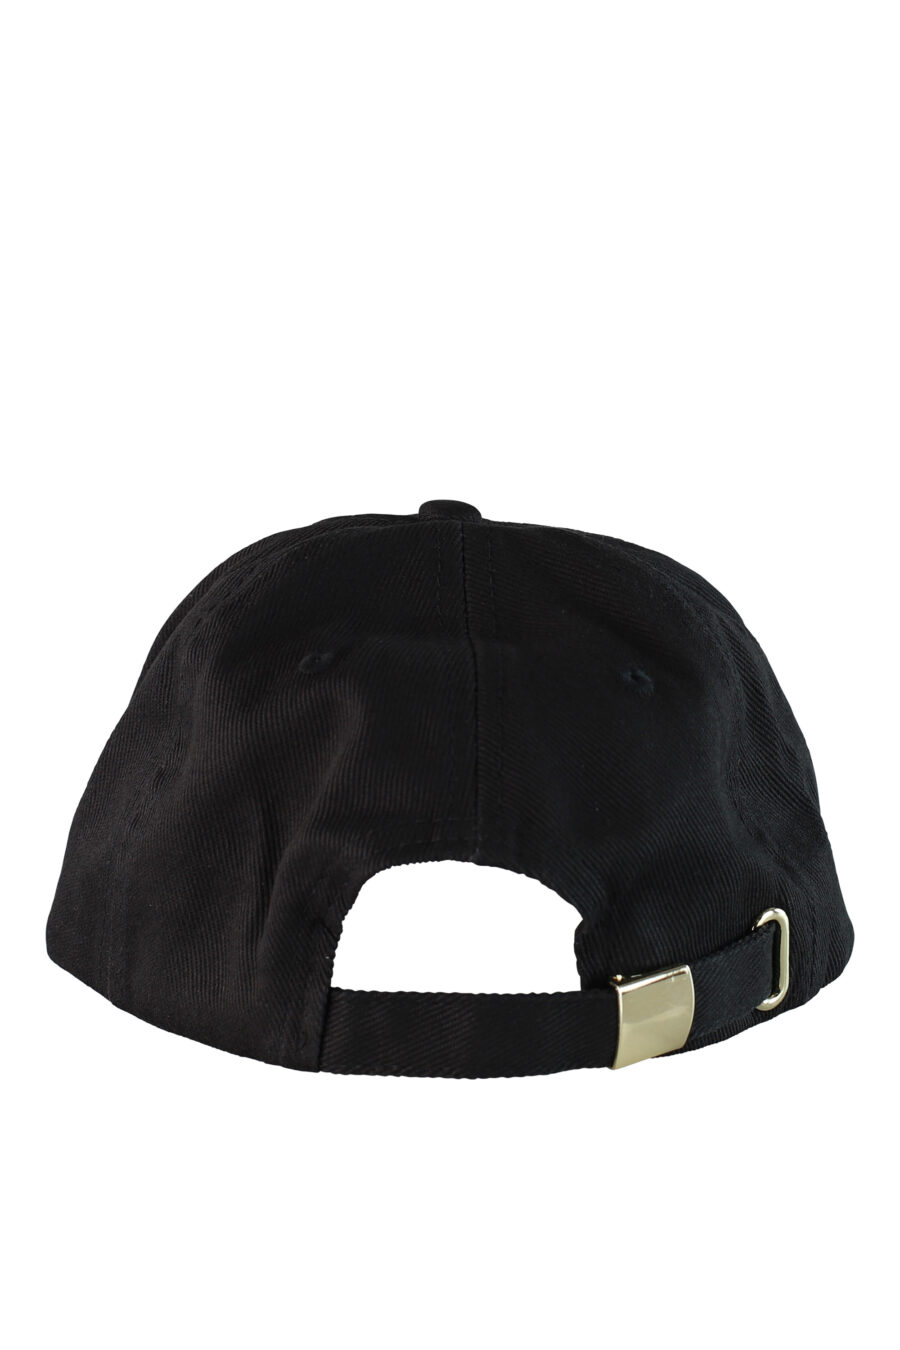 Schwarze Kappe mit kreisförmigem Logo in Gold - IMG 0504